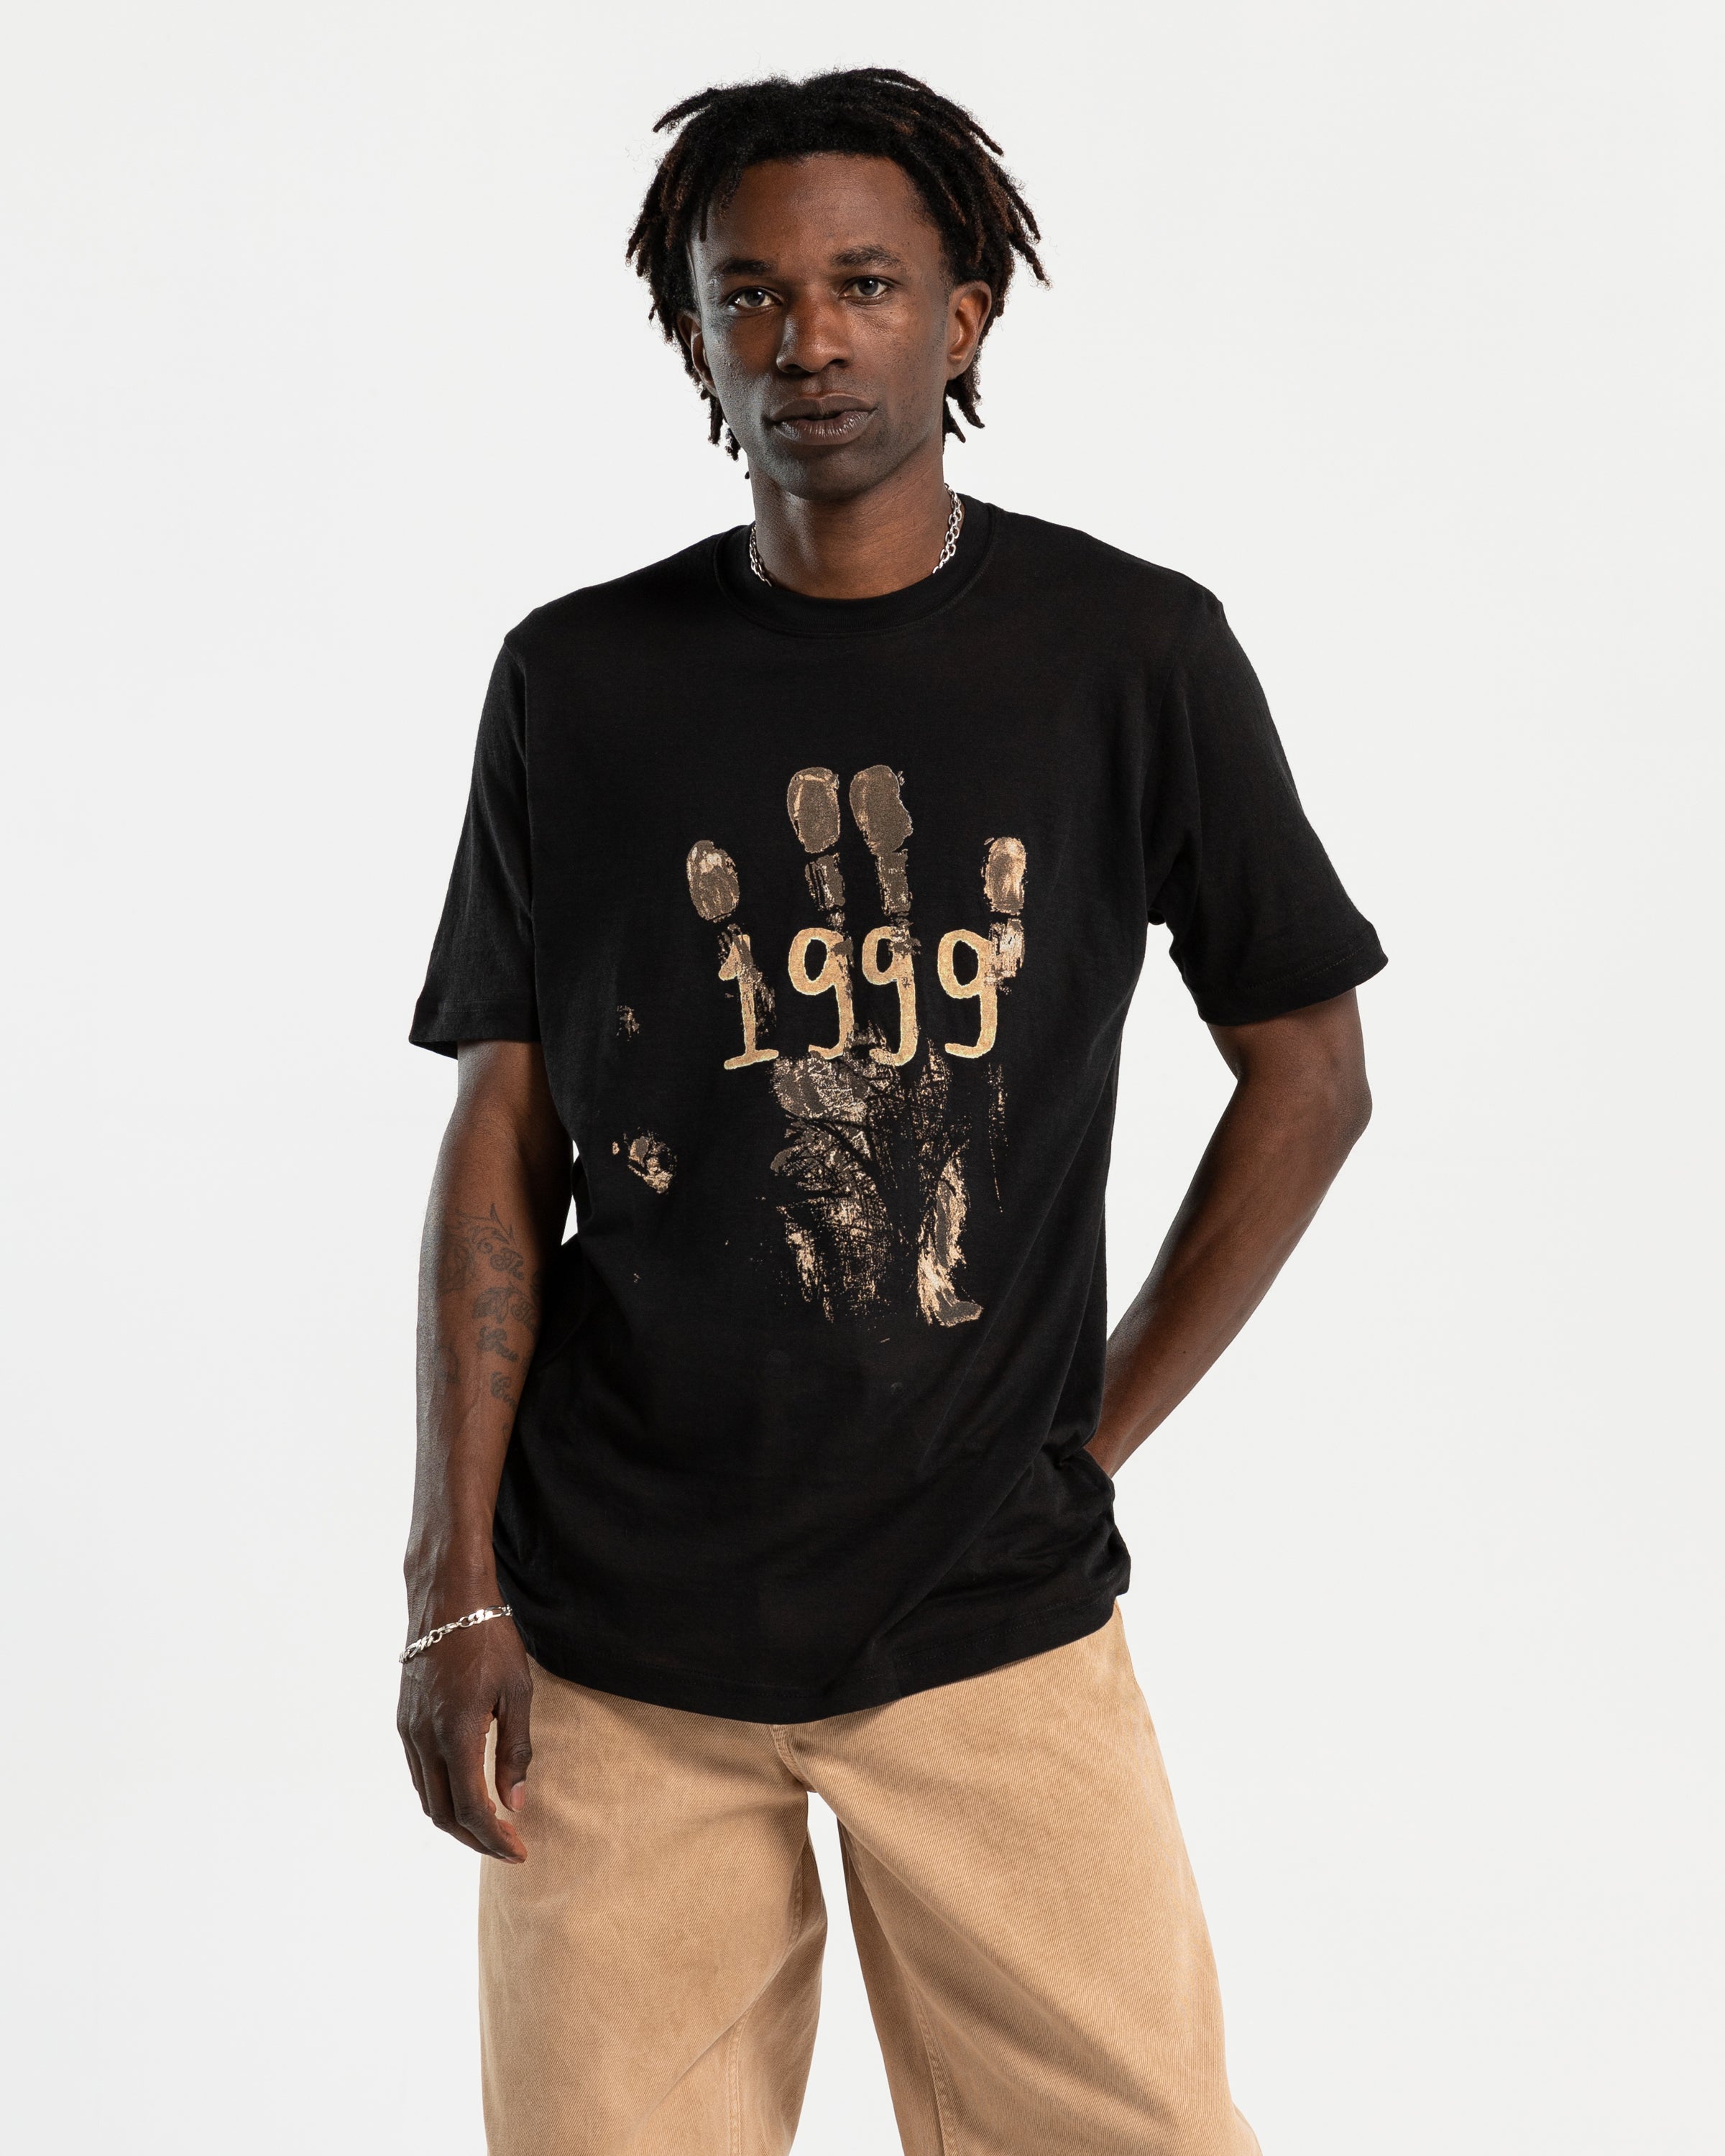 1999 Hand Slim T-Shirt in Black